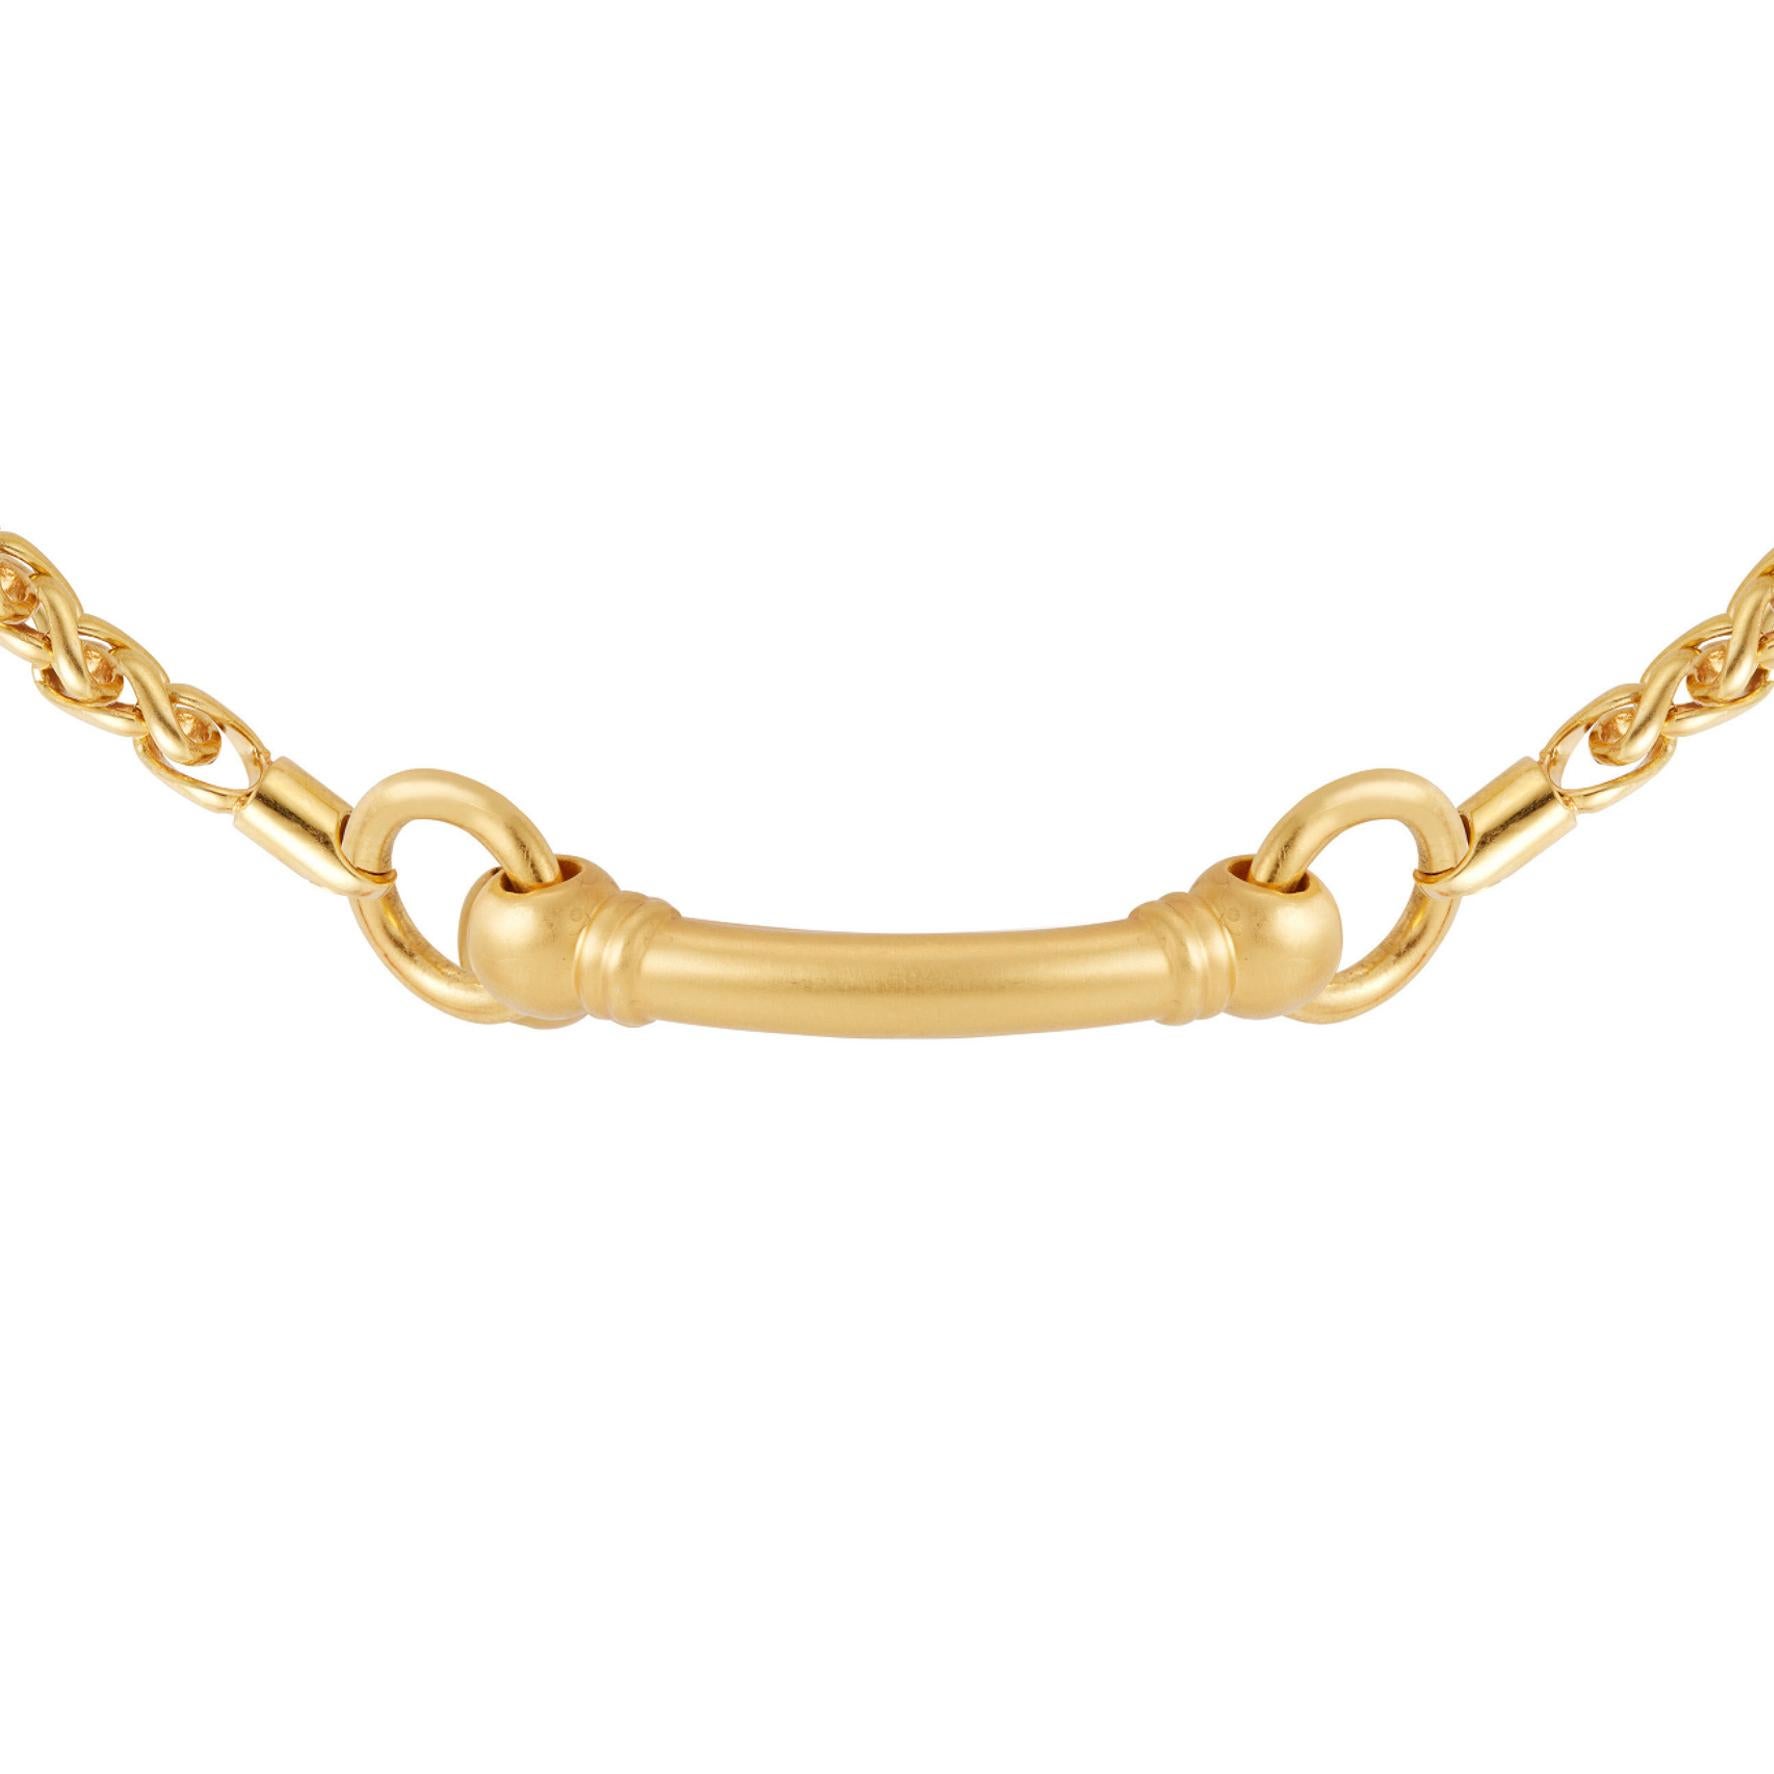 22 carat gold choker necklace design